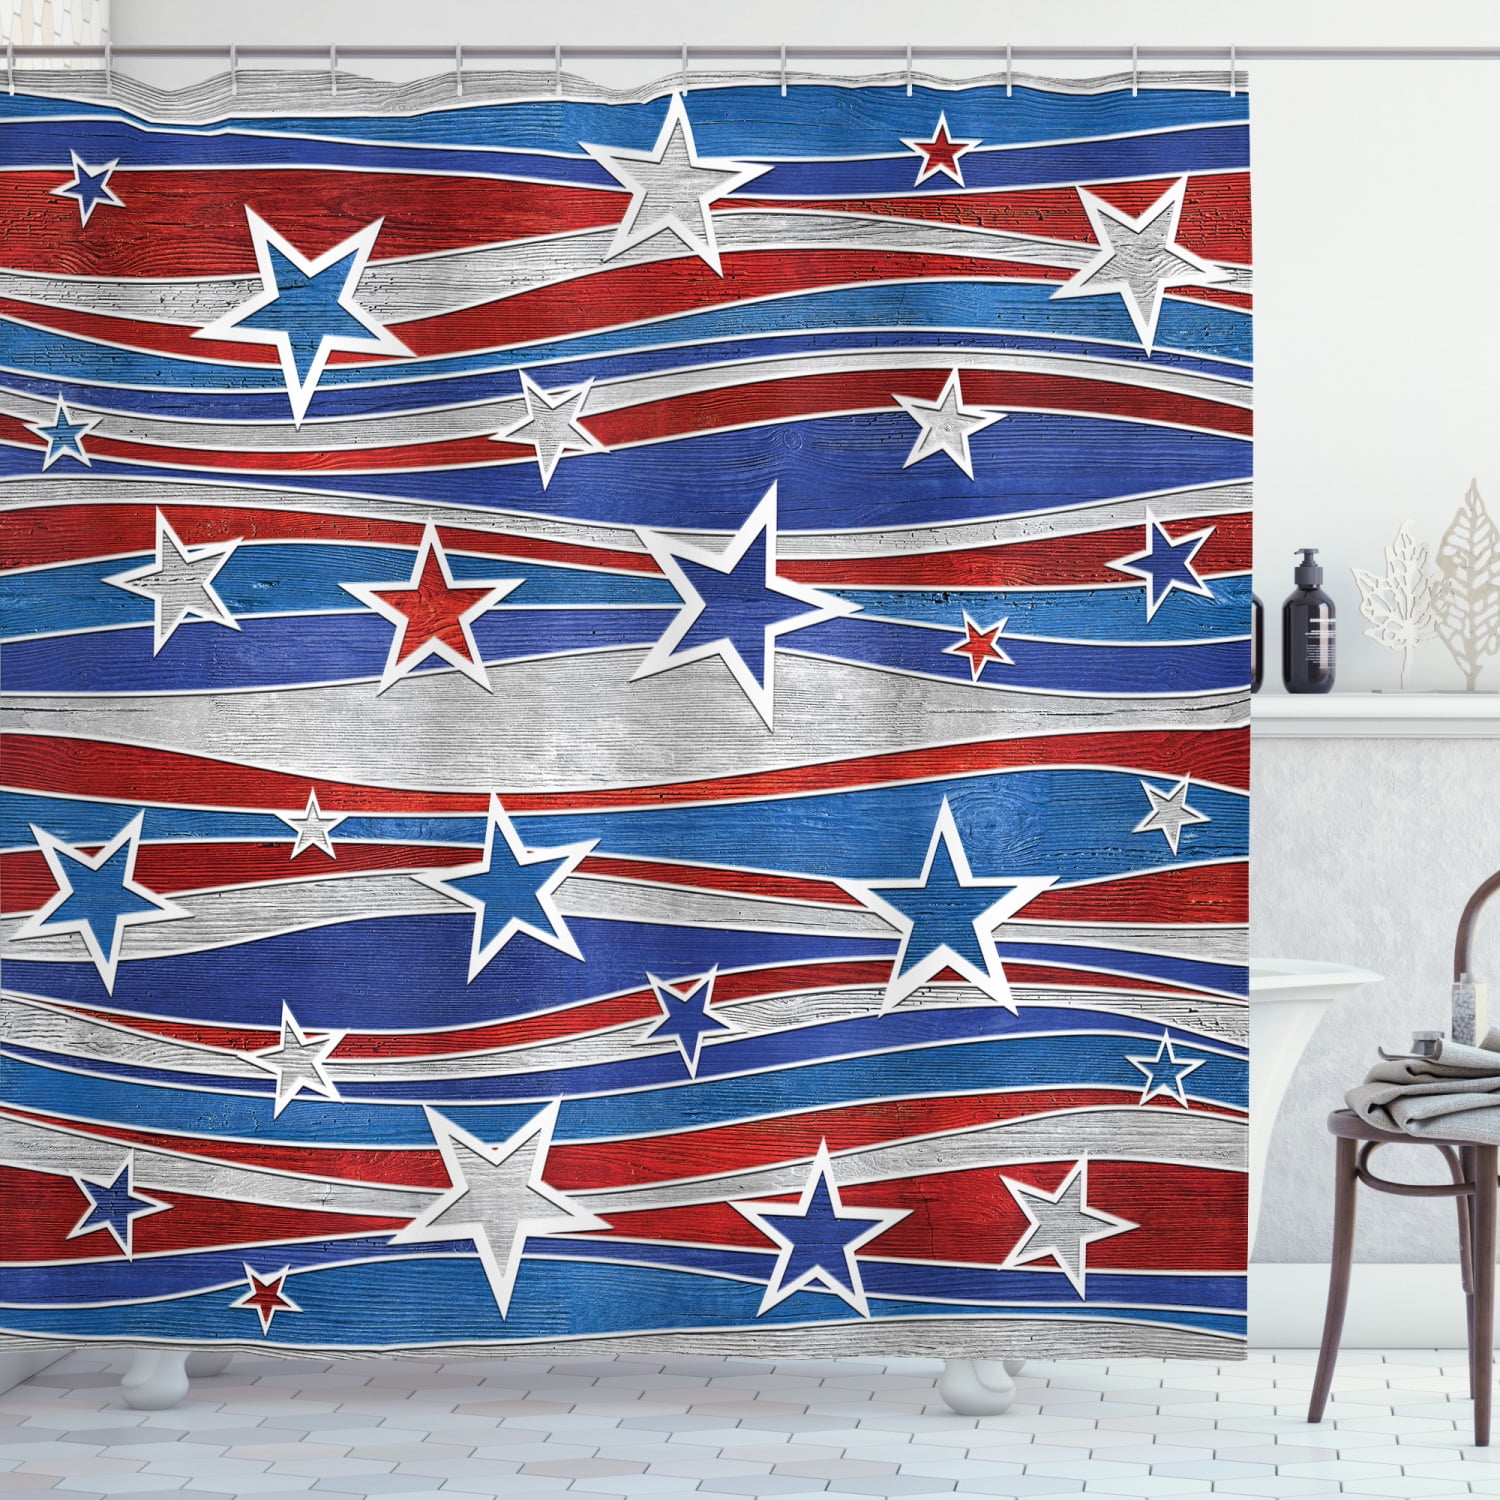 The American Flag Home Bathroom Decor Waterproof Shower Curtain & 12Hooks 